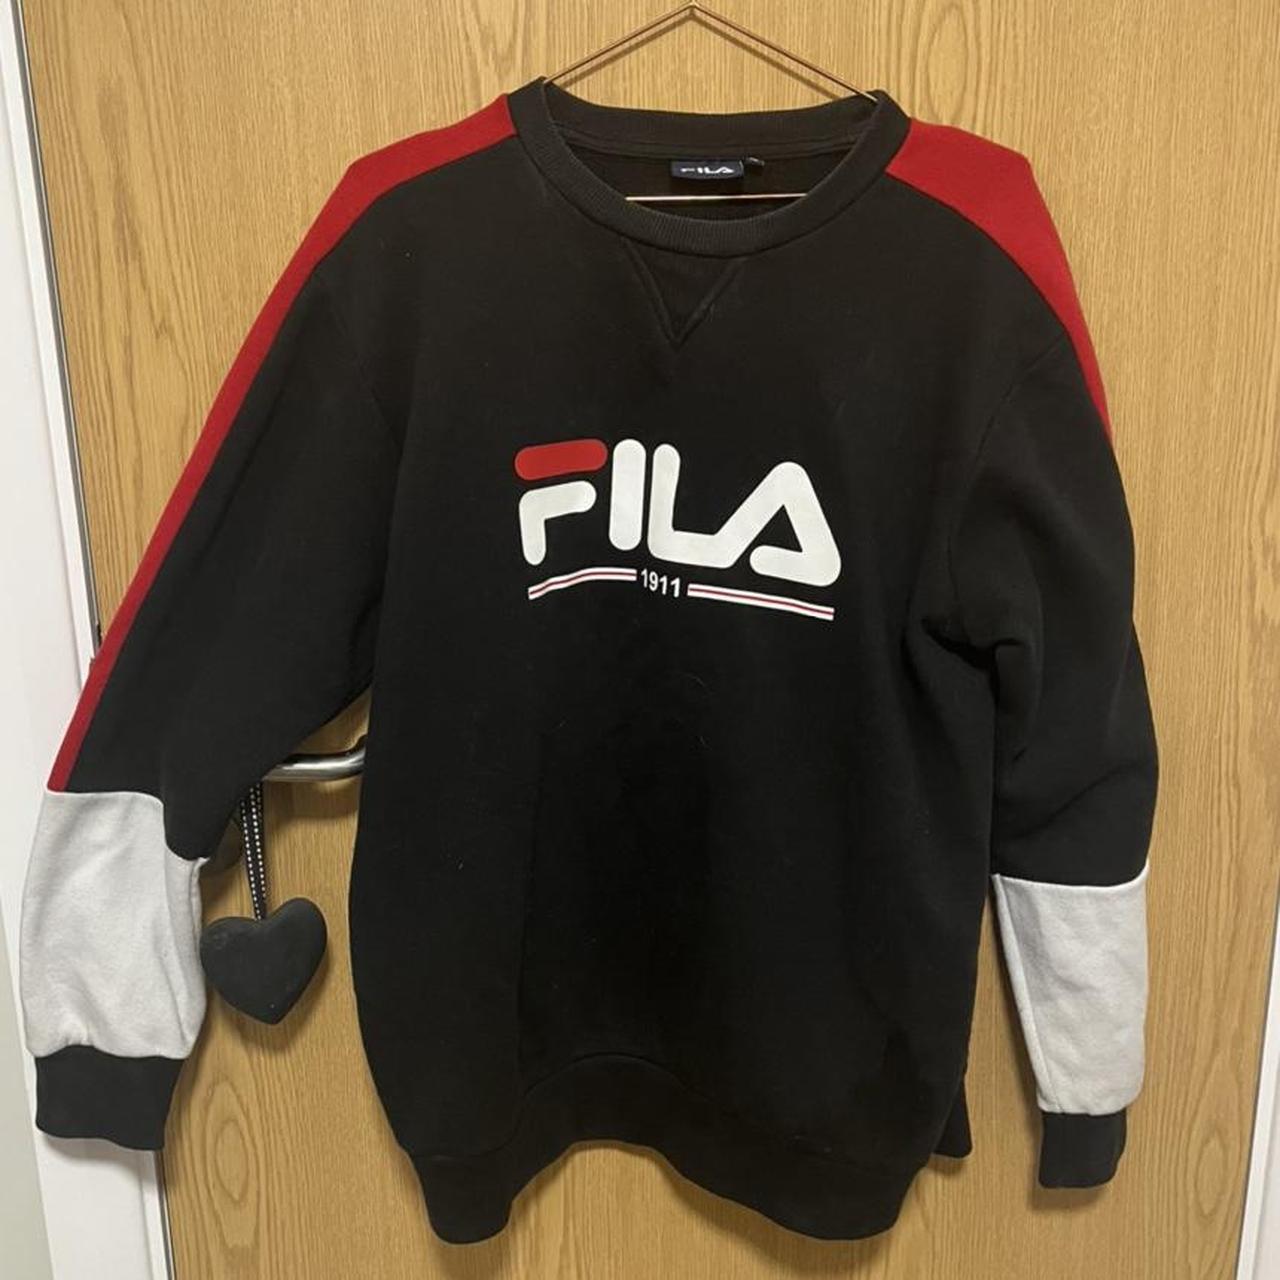 Fila Women's Black and White Sweatshirt | Depop